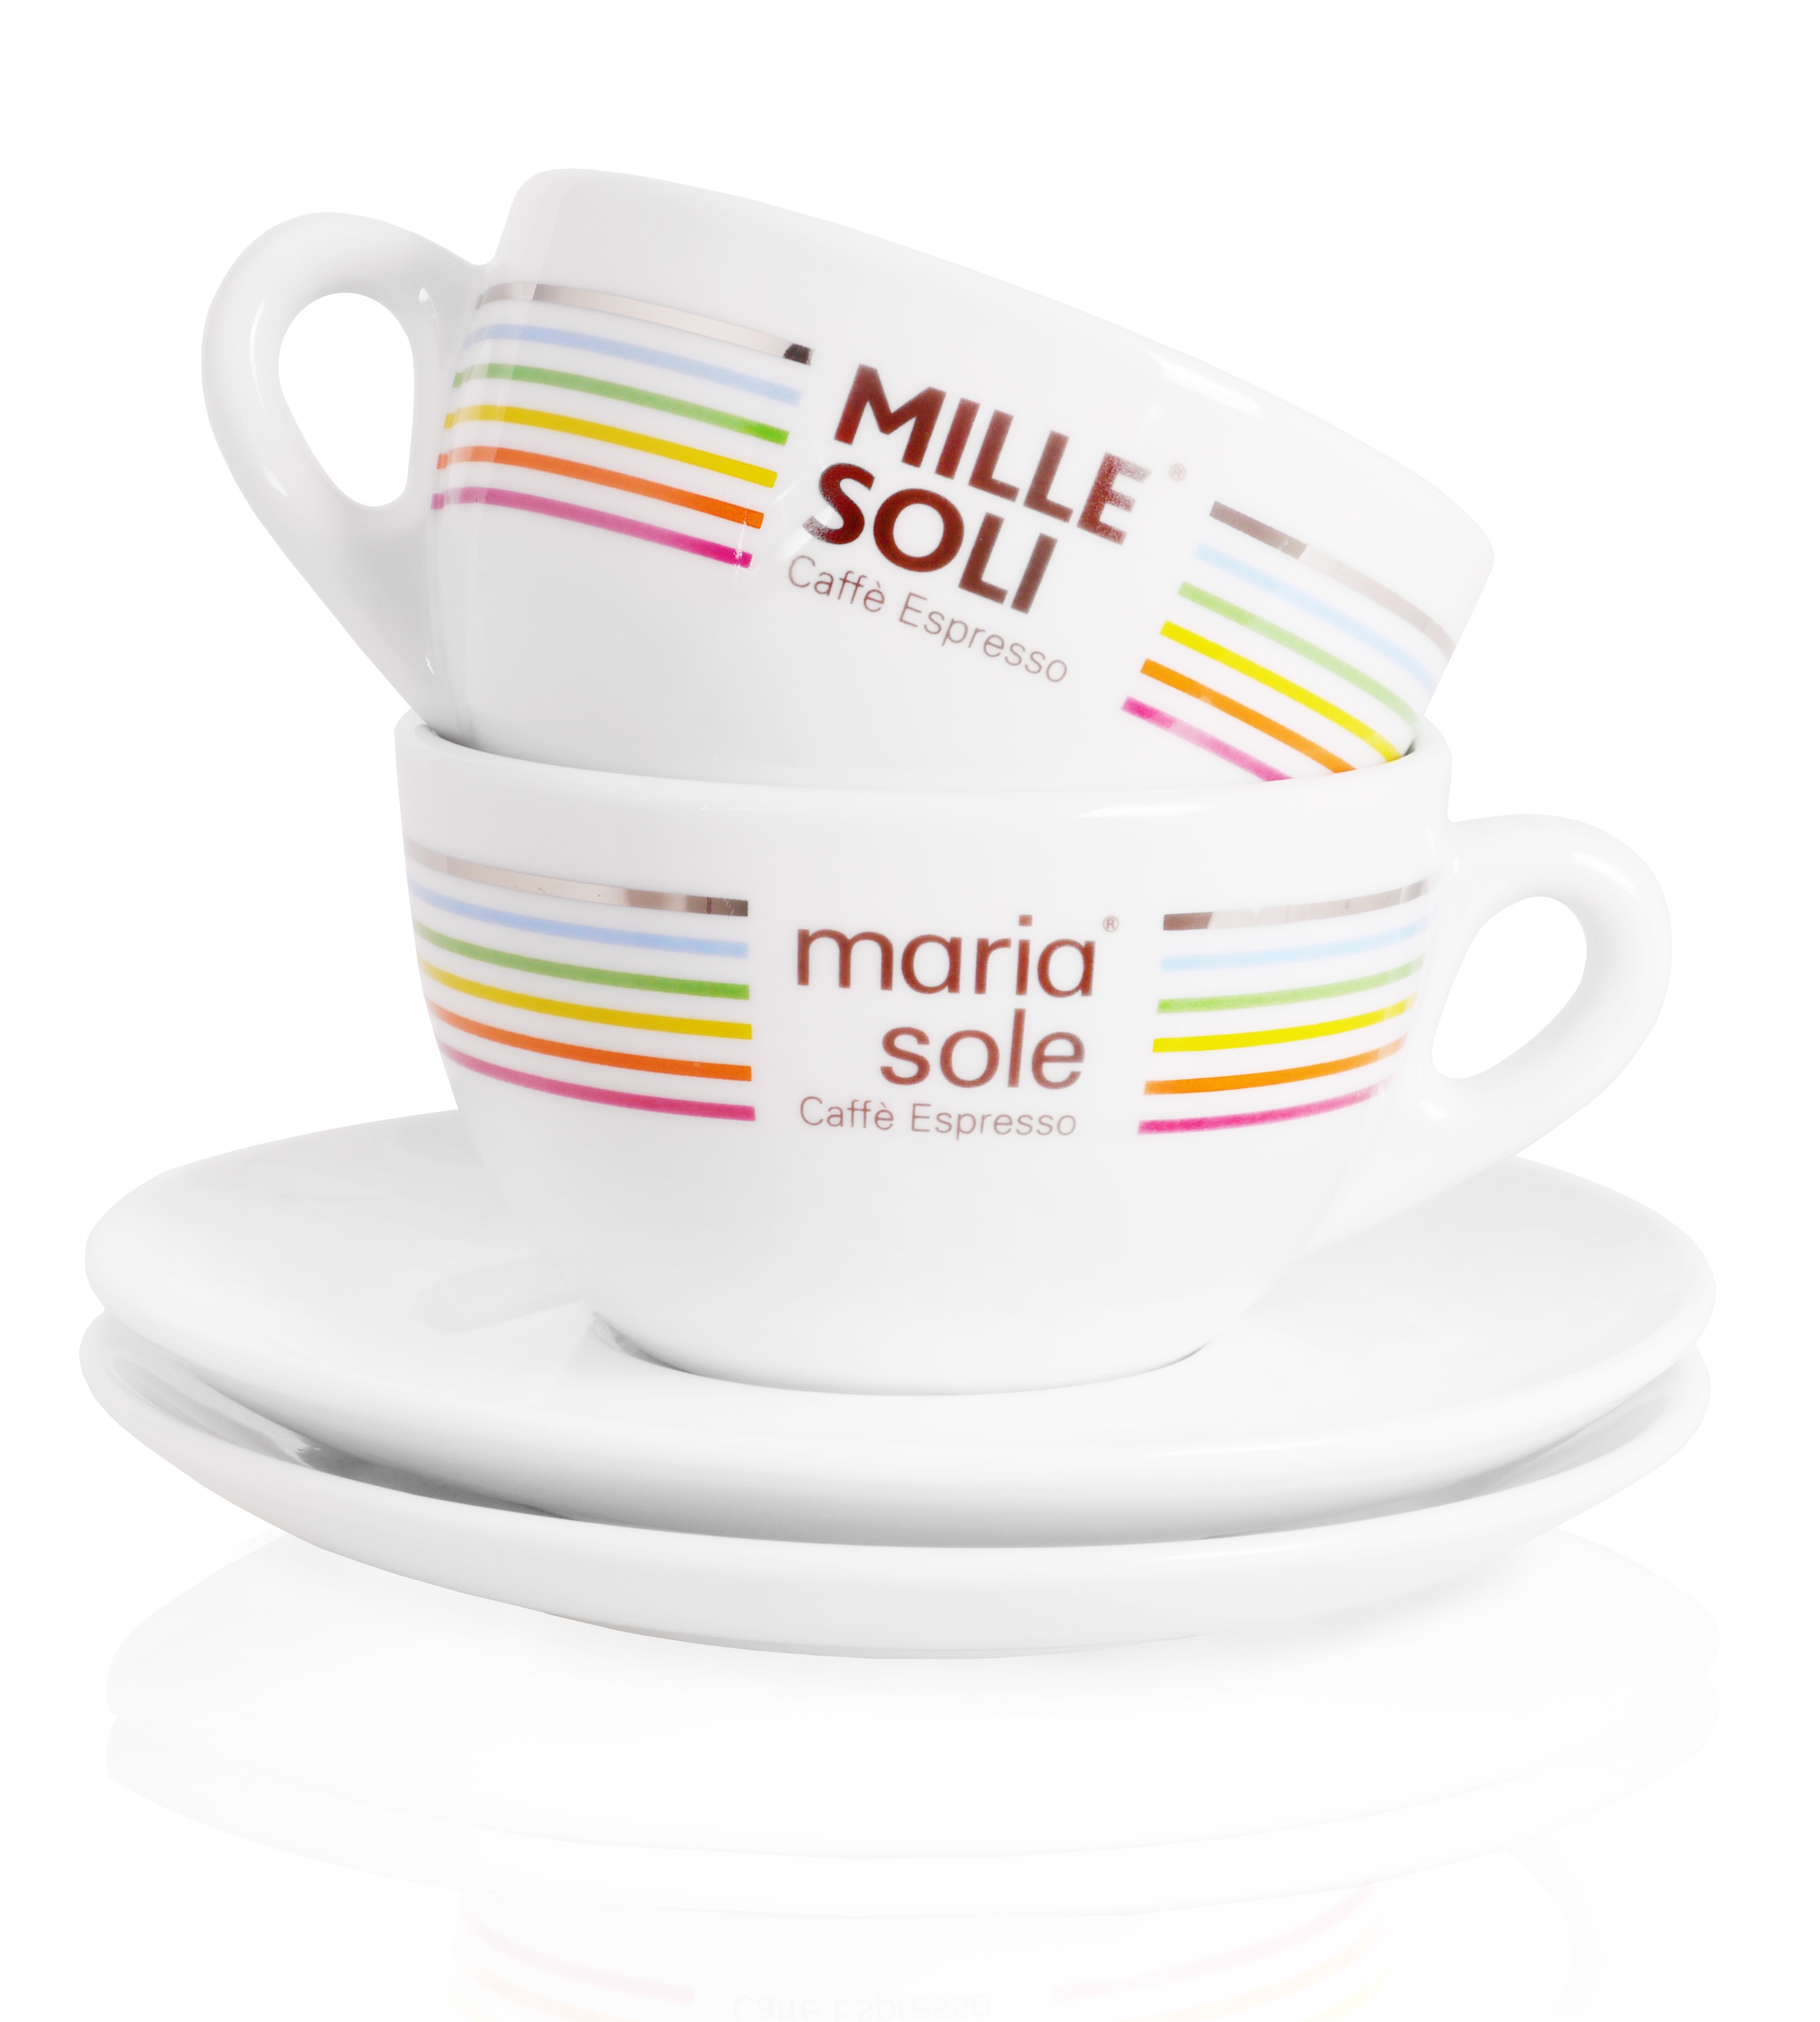 MARIASOLE & MILLE SOLI latte cup / saucer